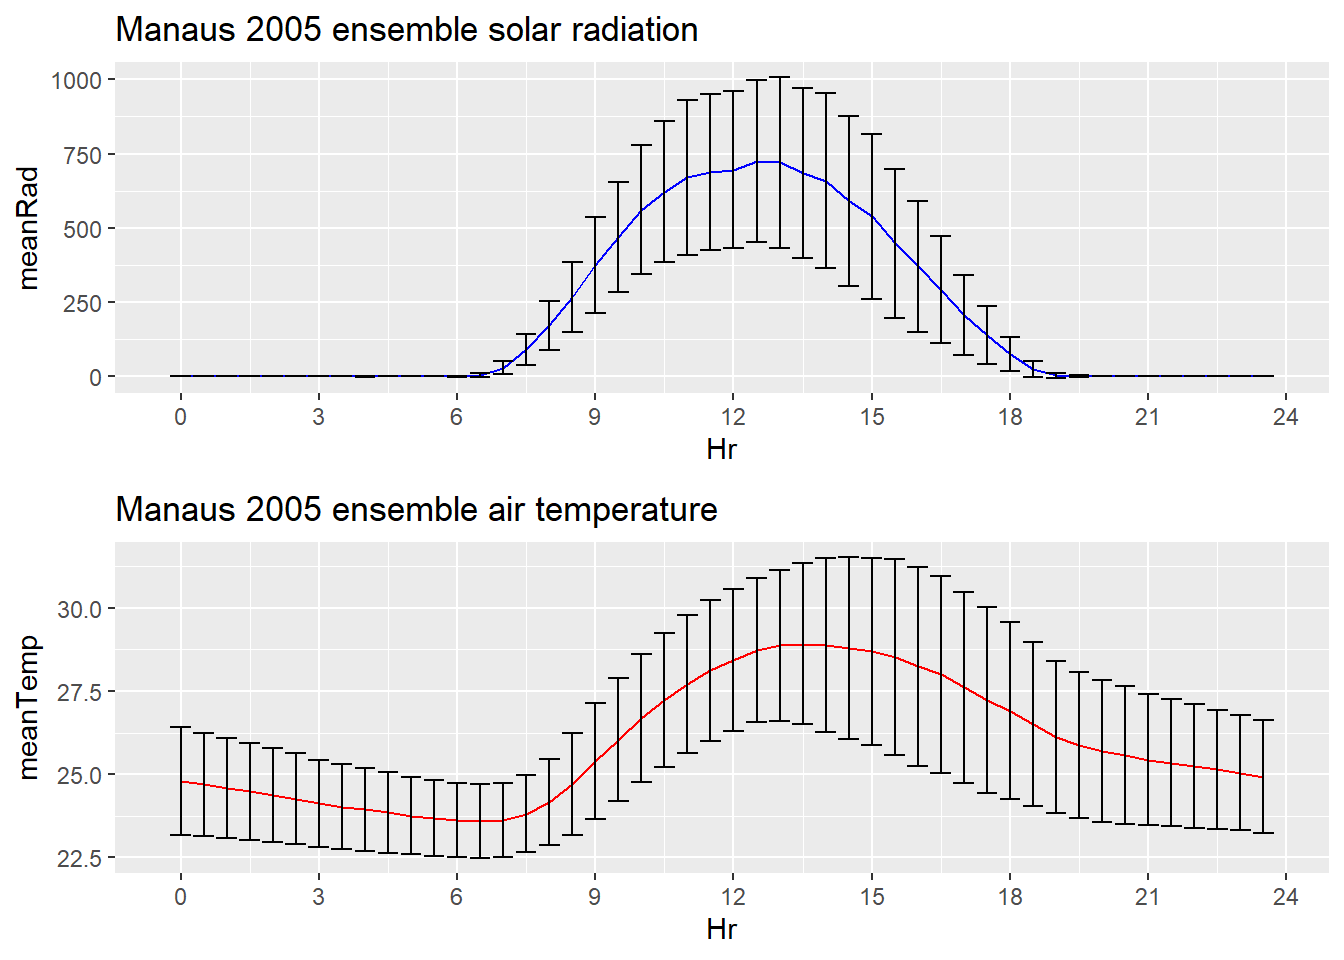 Manaus ensemble averages with error bars